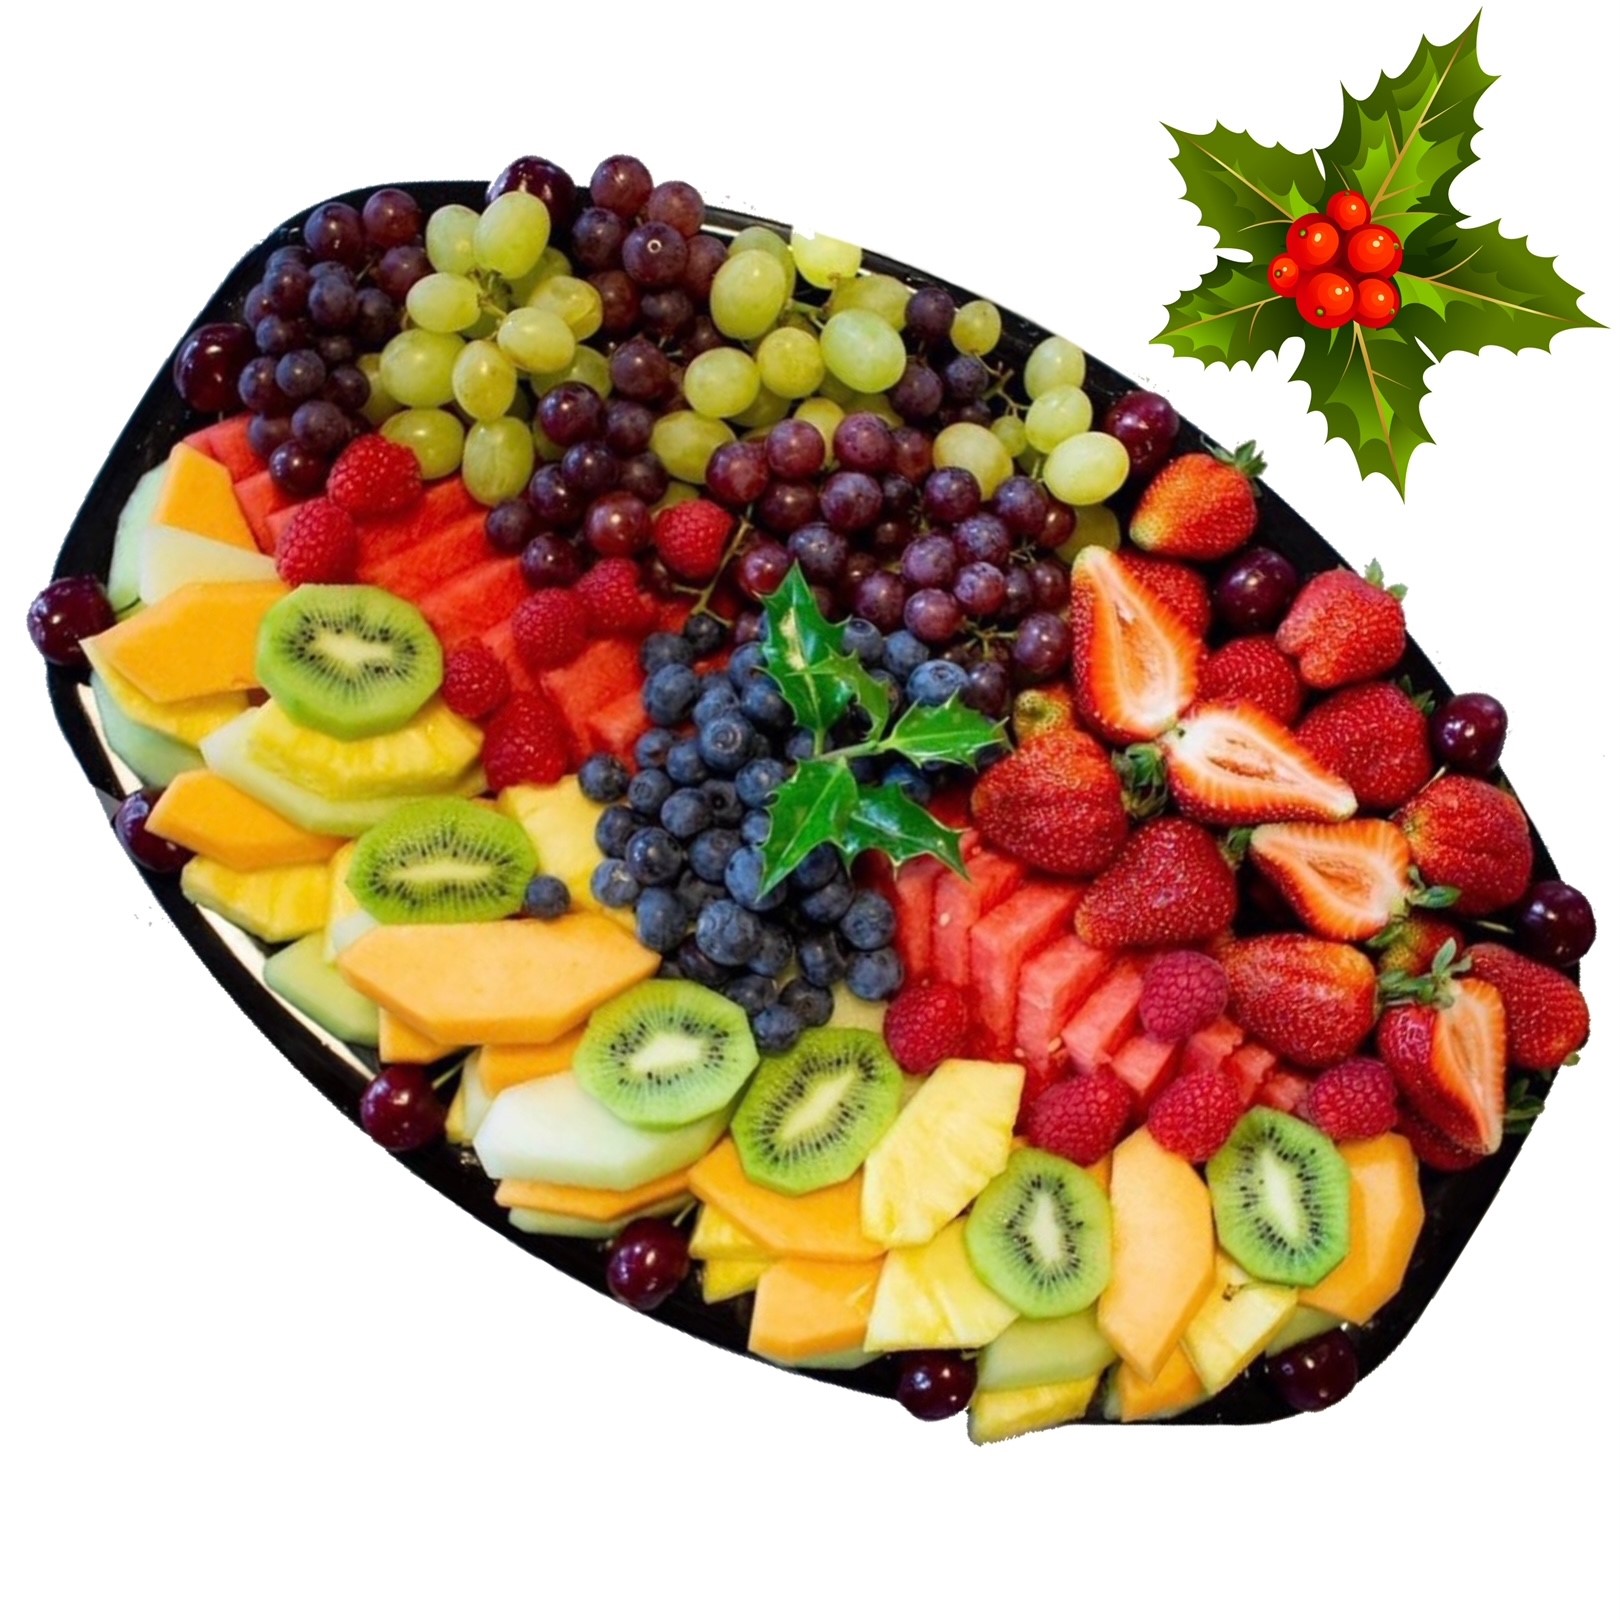 Holiday Fruit Platter Ideas